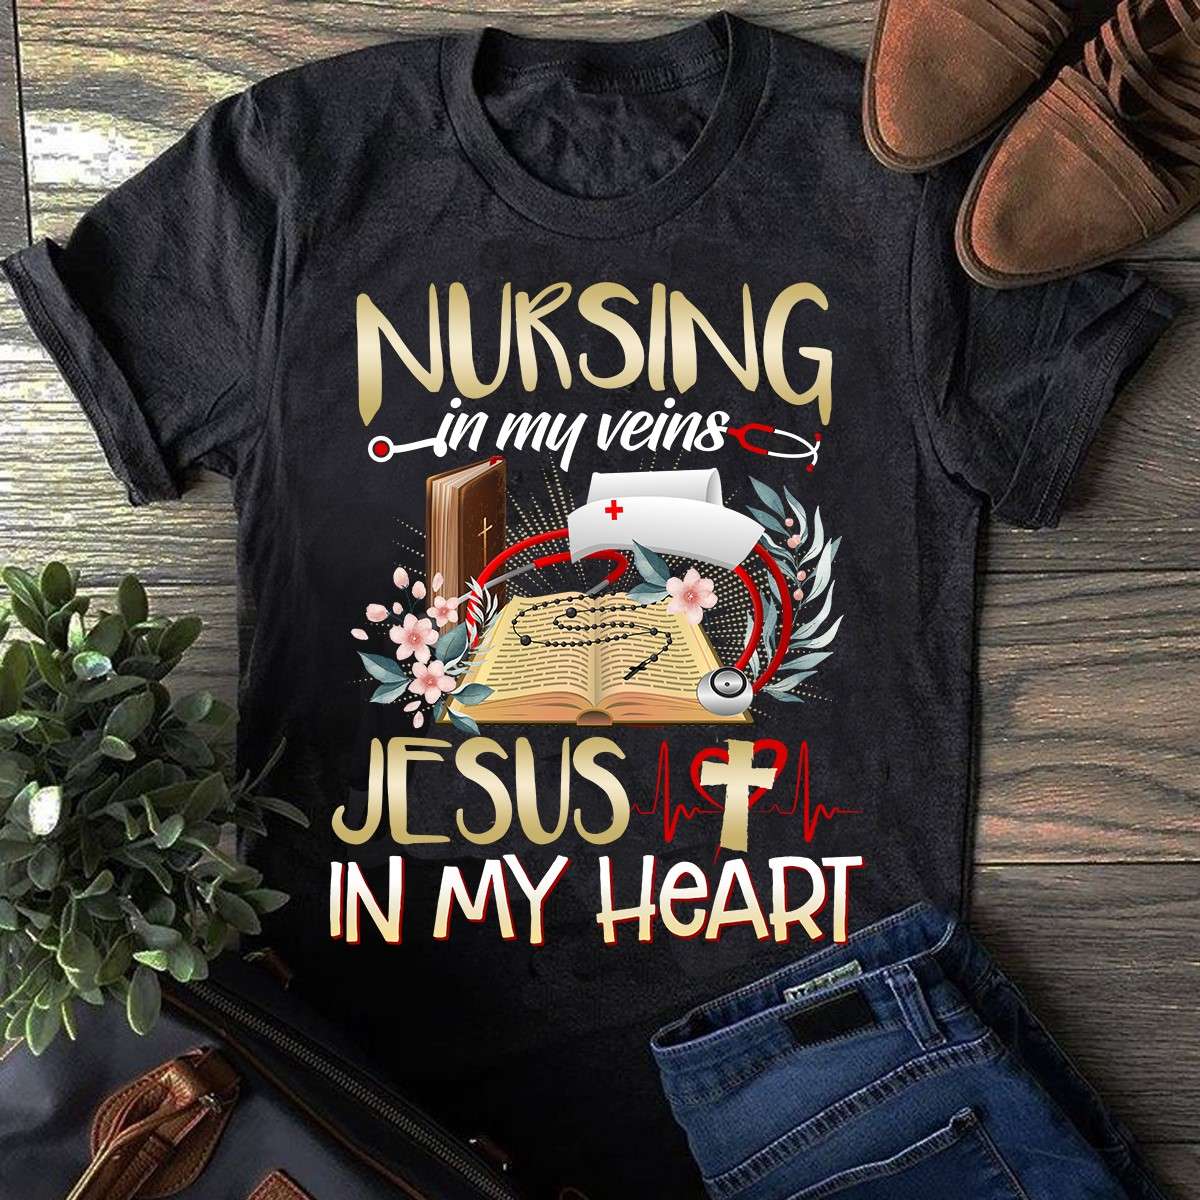 Nursing in my veins, Jesus in my heart - Nurse and God